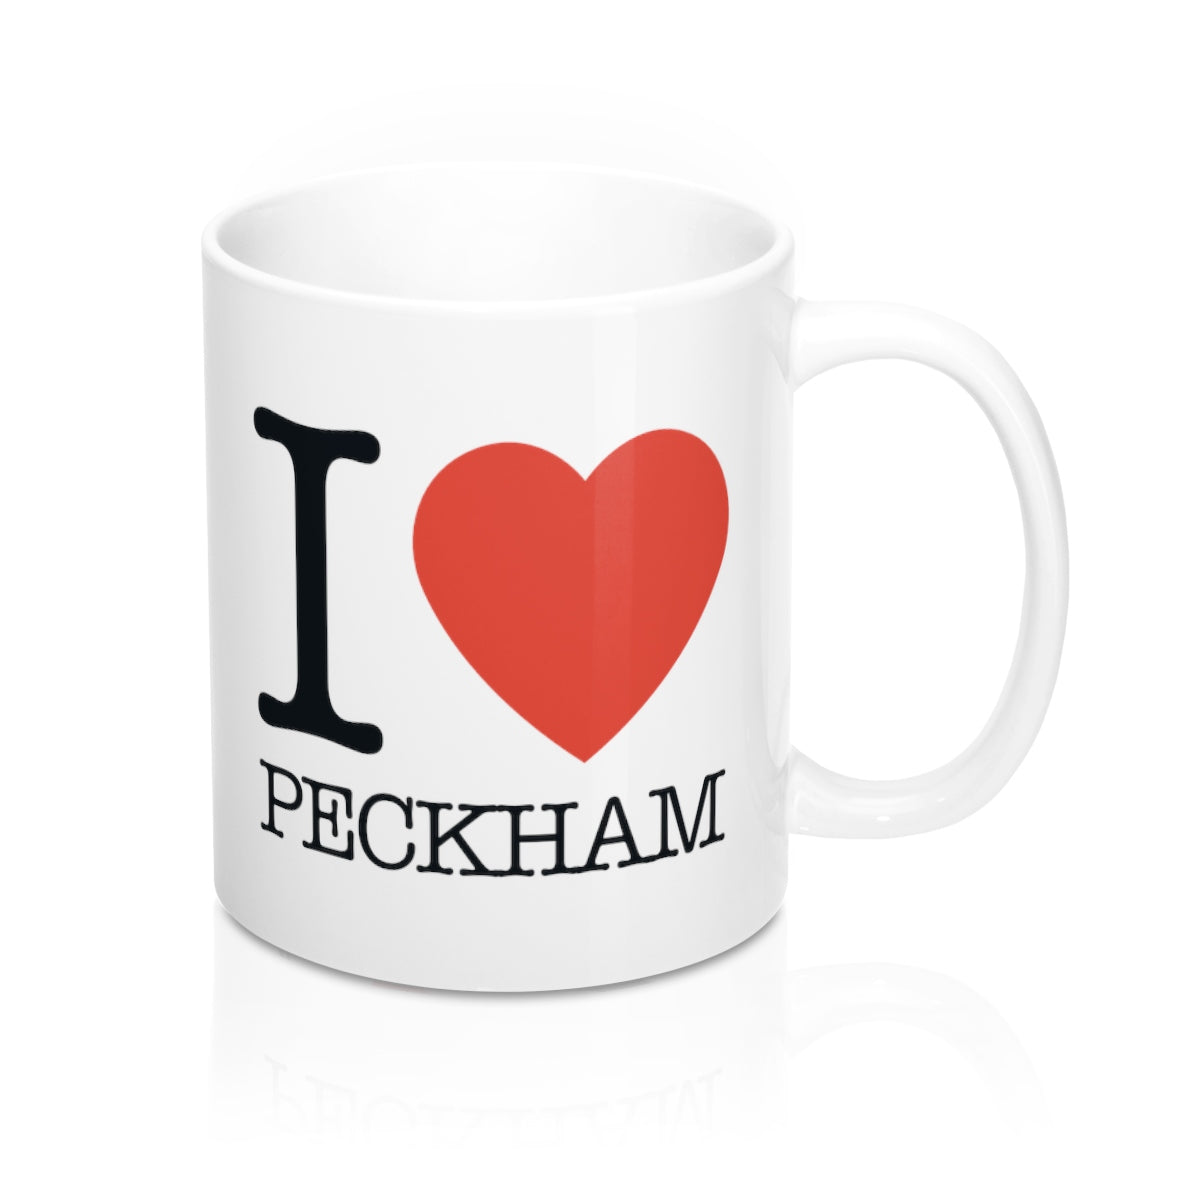 I Heart Peckham Mug